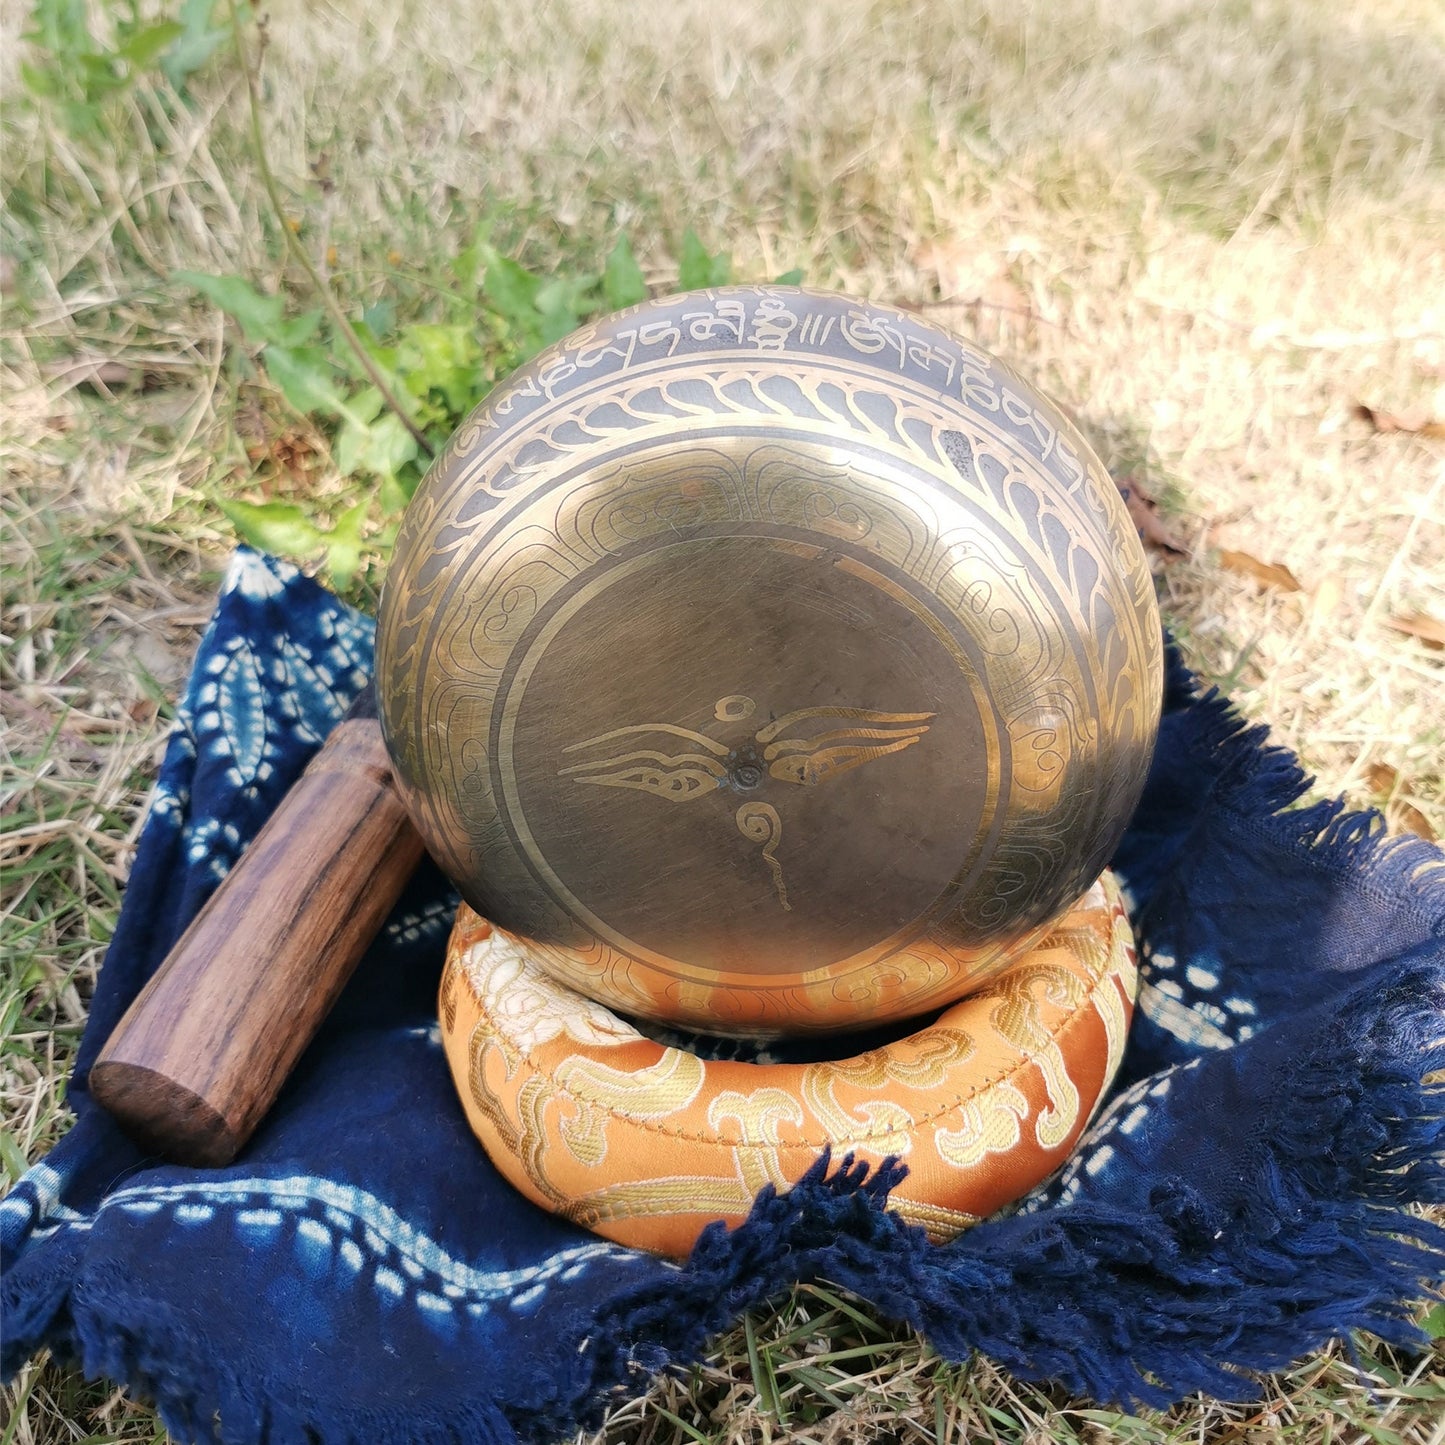 Gandhanra Classical Tibetan Singing Bowl with Amitayus Buddha & OM Mantra Symbol,For Sound Healing,Meditation,Relaxation,Handmade in Nepal